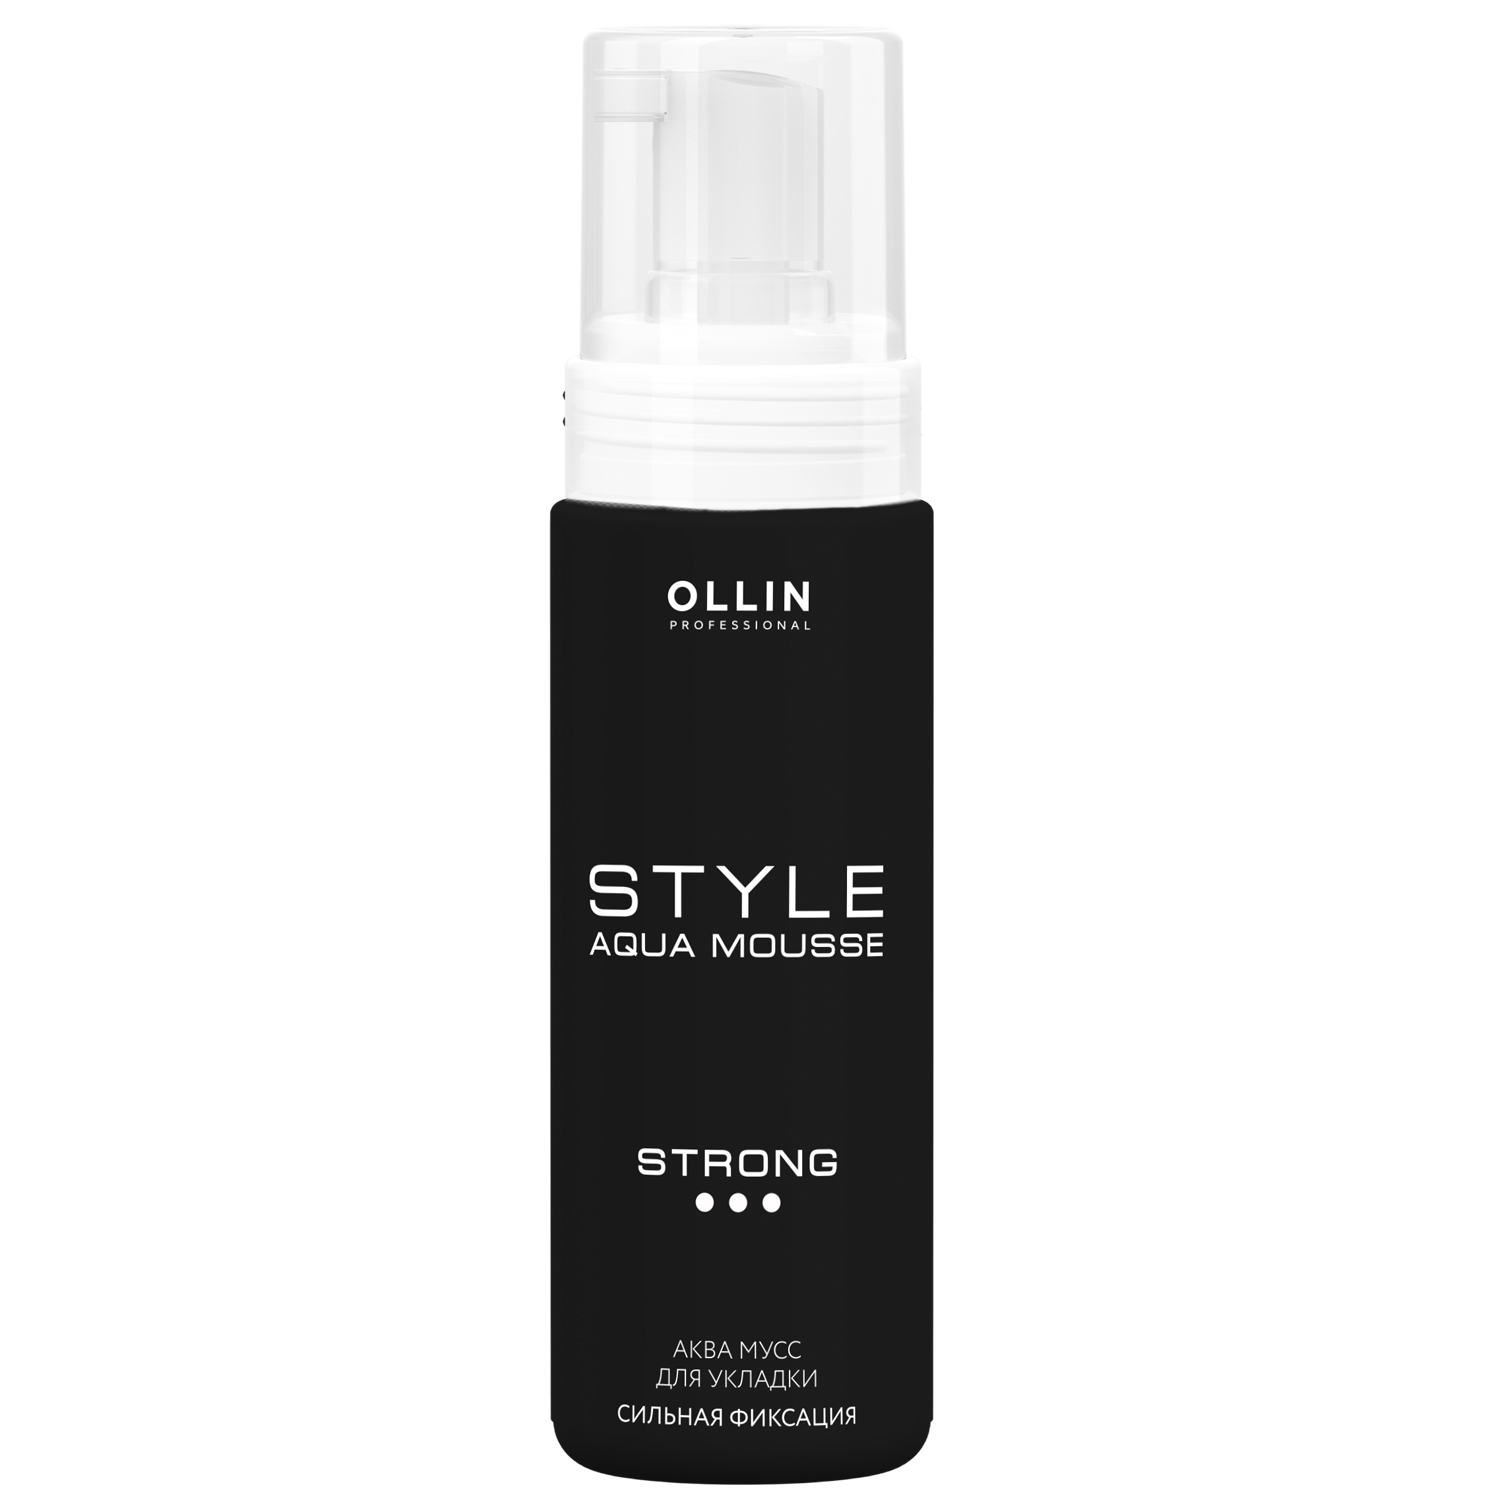 Ollin Professional Аквамусс для укладки сильной фиксации, 150 мл (Ollin Professional, Style) ollin professional лак для волос сильной фиксации 500 мл ollin professional style